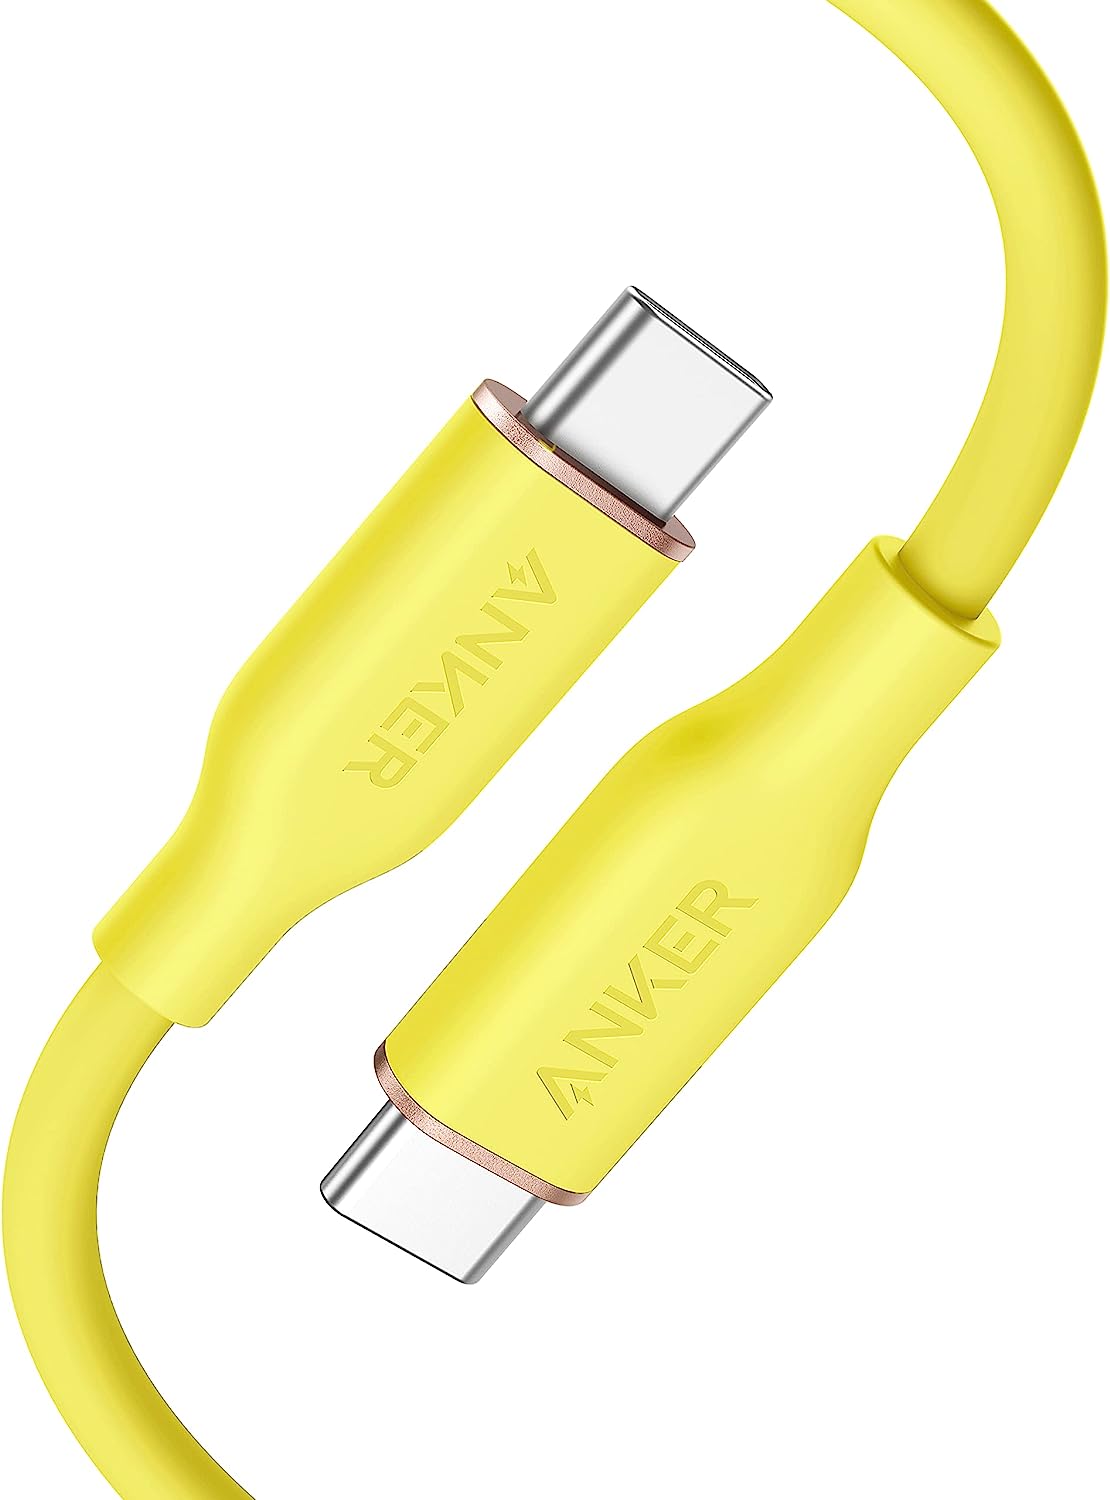 Anker PowerLine III Flow USB-C & USB-C ケーブル Anker絡まないケーブル PD対応 シリコン素材採用100W Galaxy iPad Pro MacBookPro Air 各種対応 アンカー